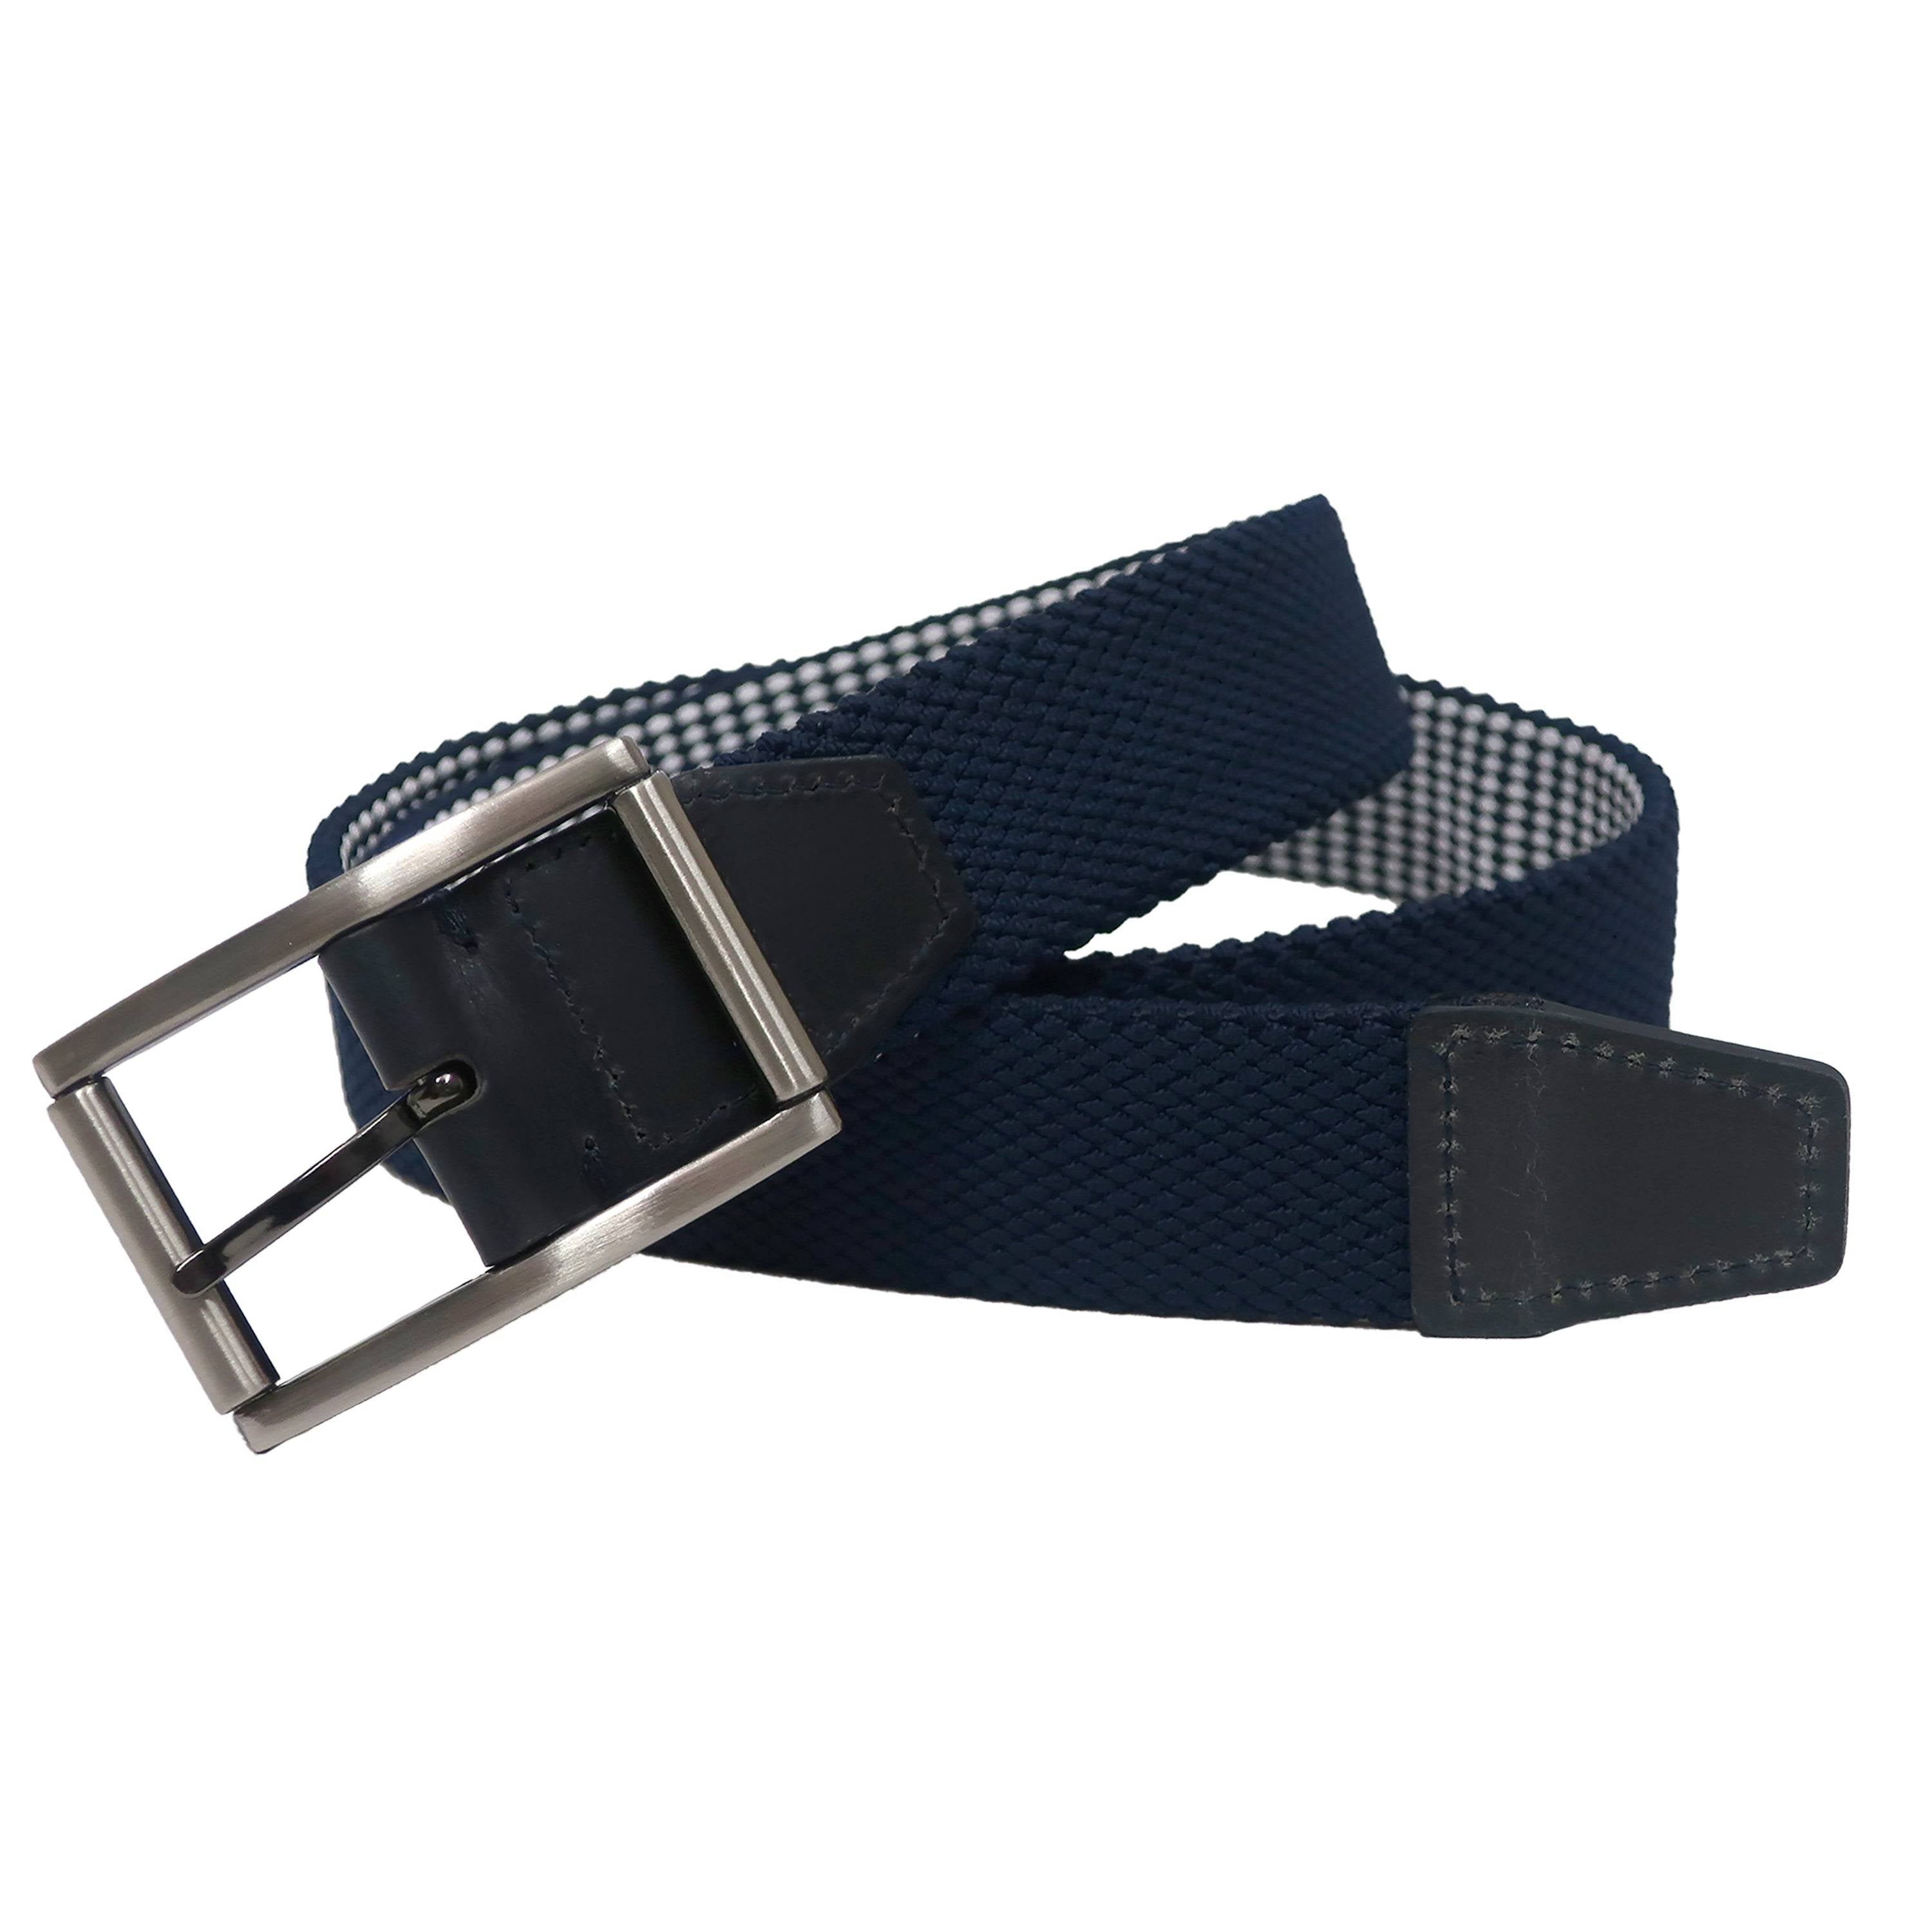 Navy reversible Woven Elastic Belt with center bar buckle